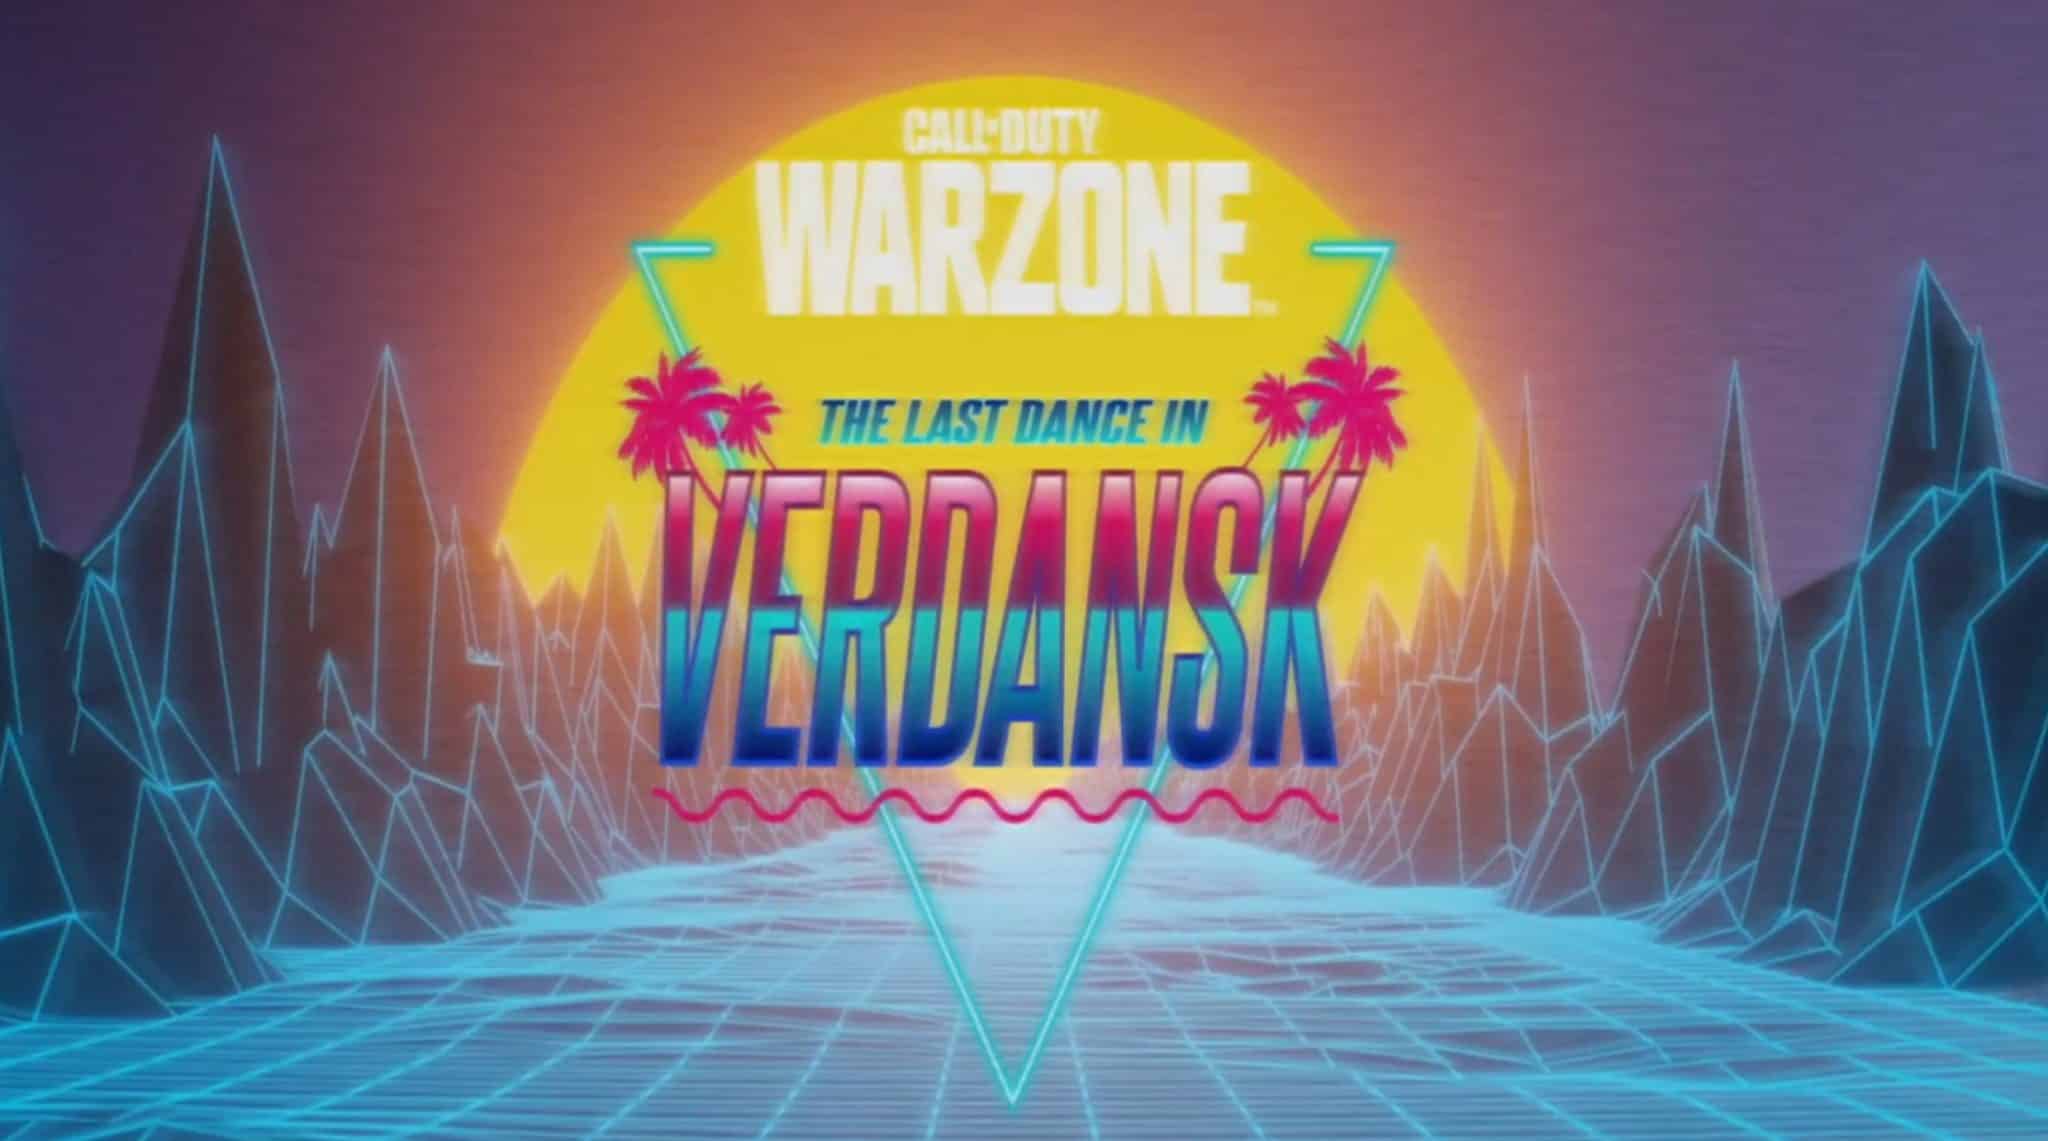 The Last Dance in Verdansk announcement artwork